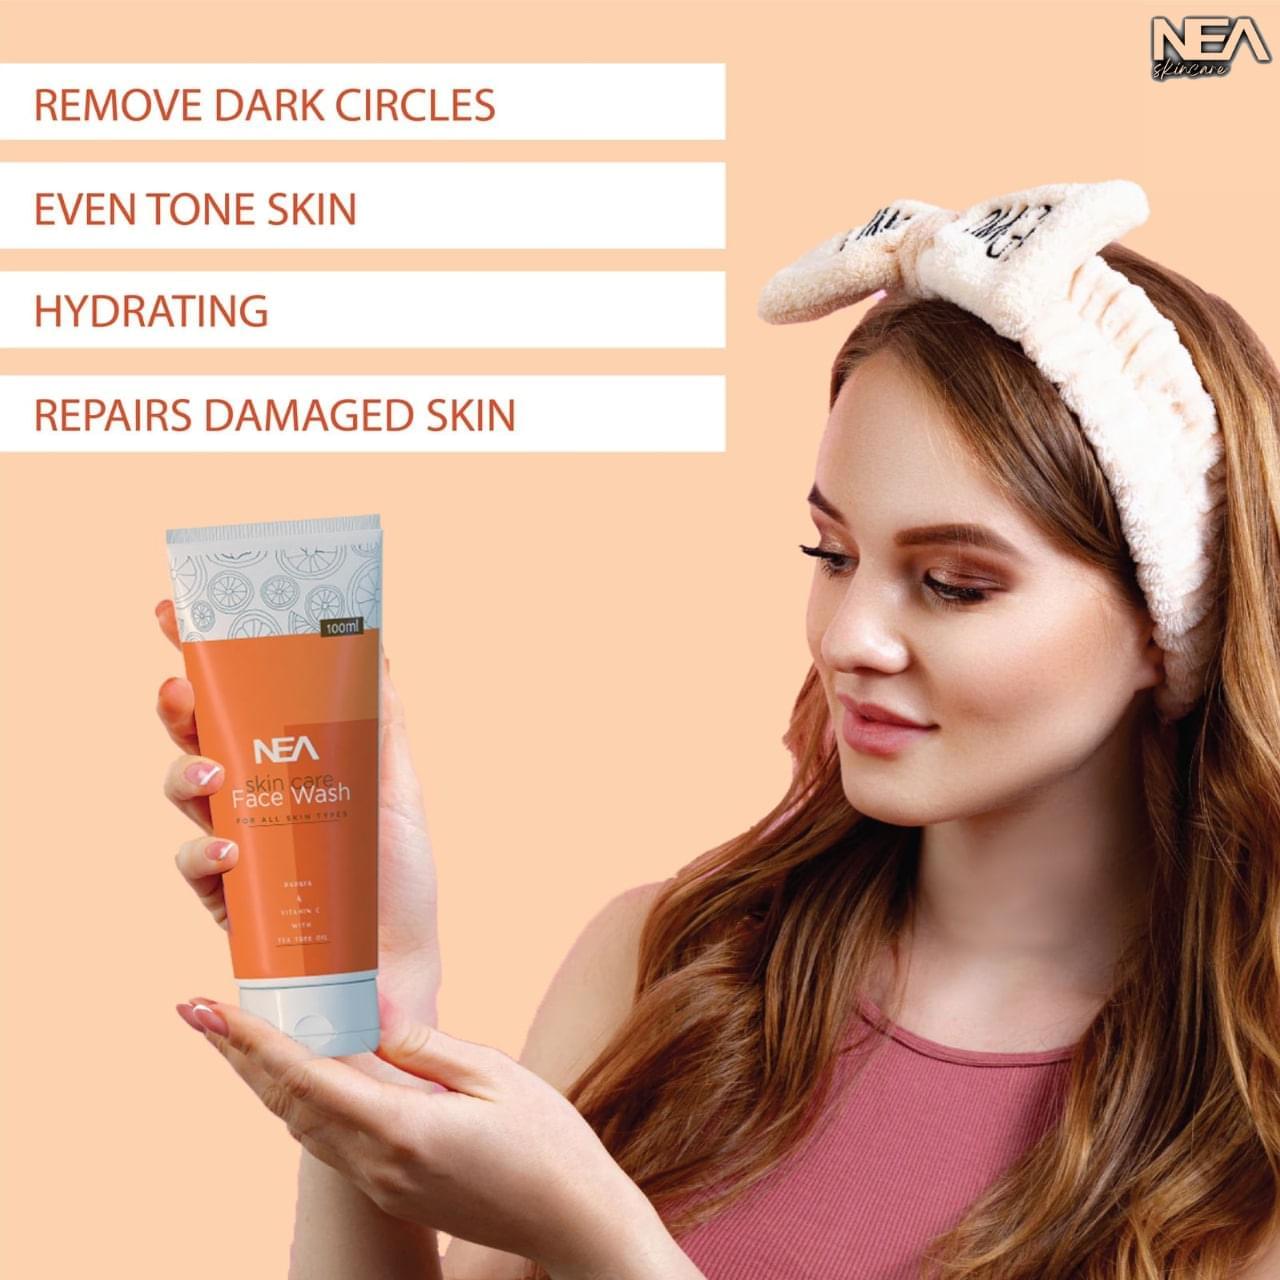 NEA Skincare Face Wash with Papaya, Vitamin C & Tea Tree Oil | All Skin Types | 100ml